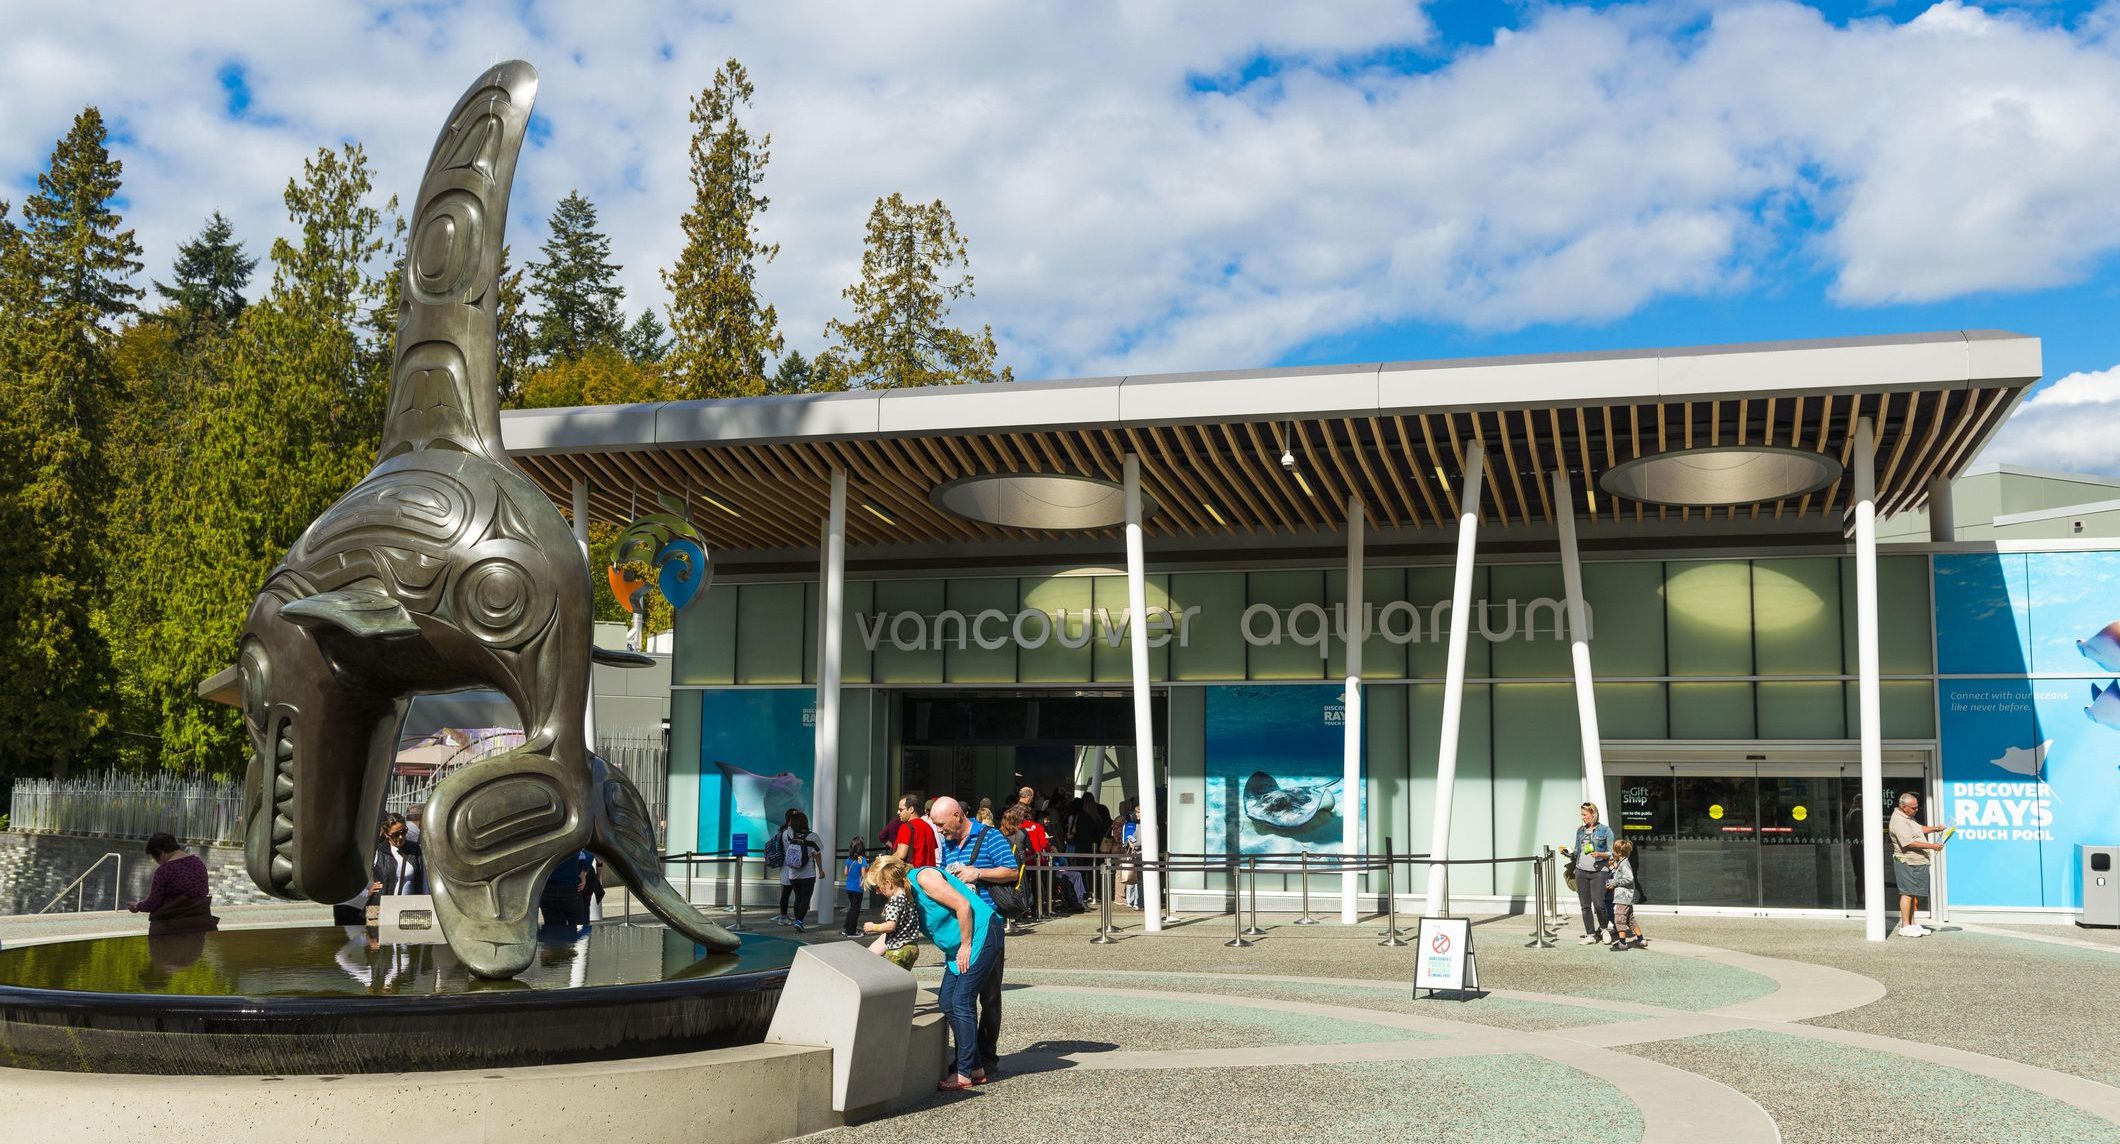 Visiting Vancouver Aquarium & Stanley Park